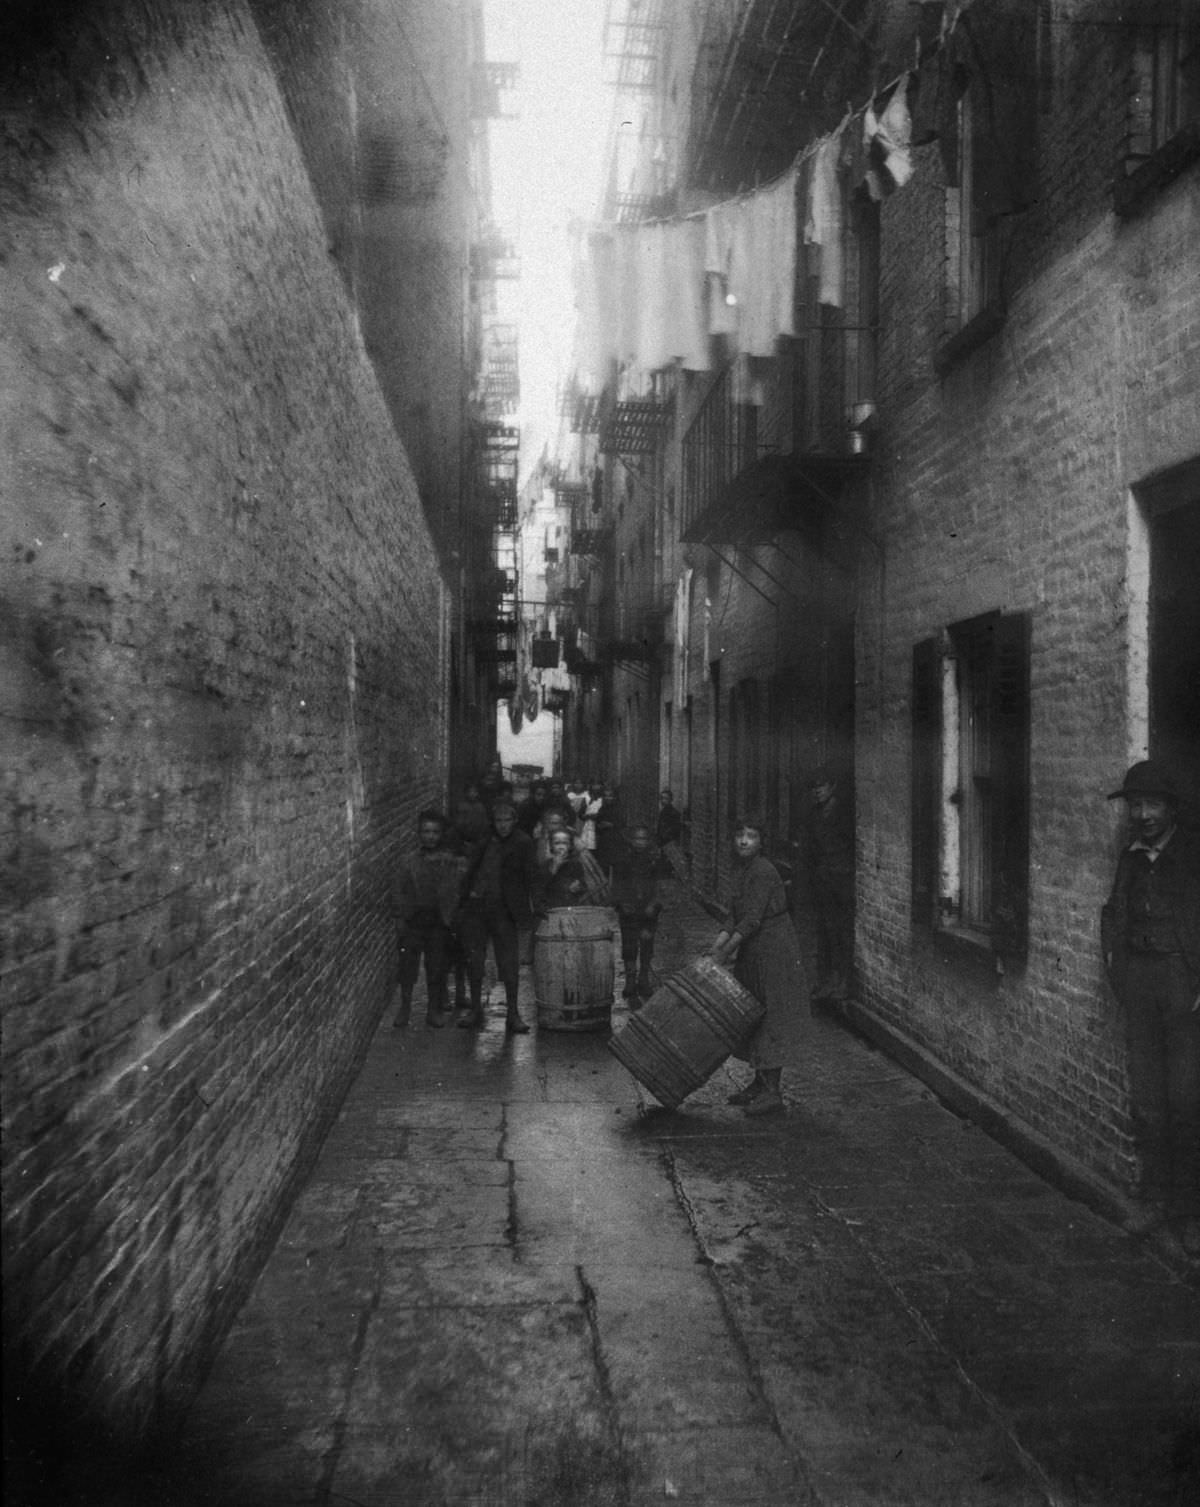 Children play with barrels in an alley between tenement buildings in Gotham Court, 38 Cherry Street, 1890